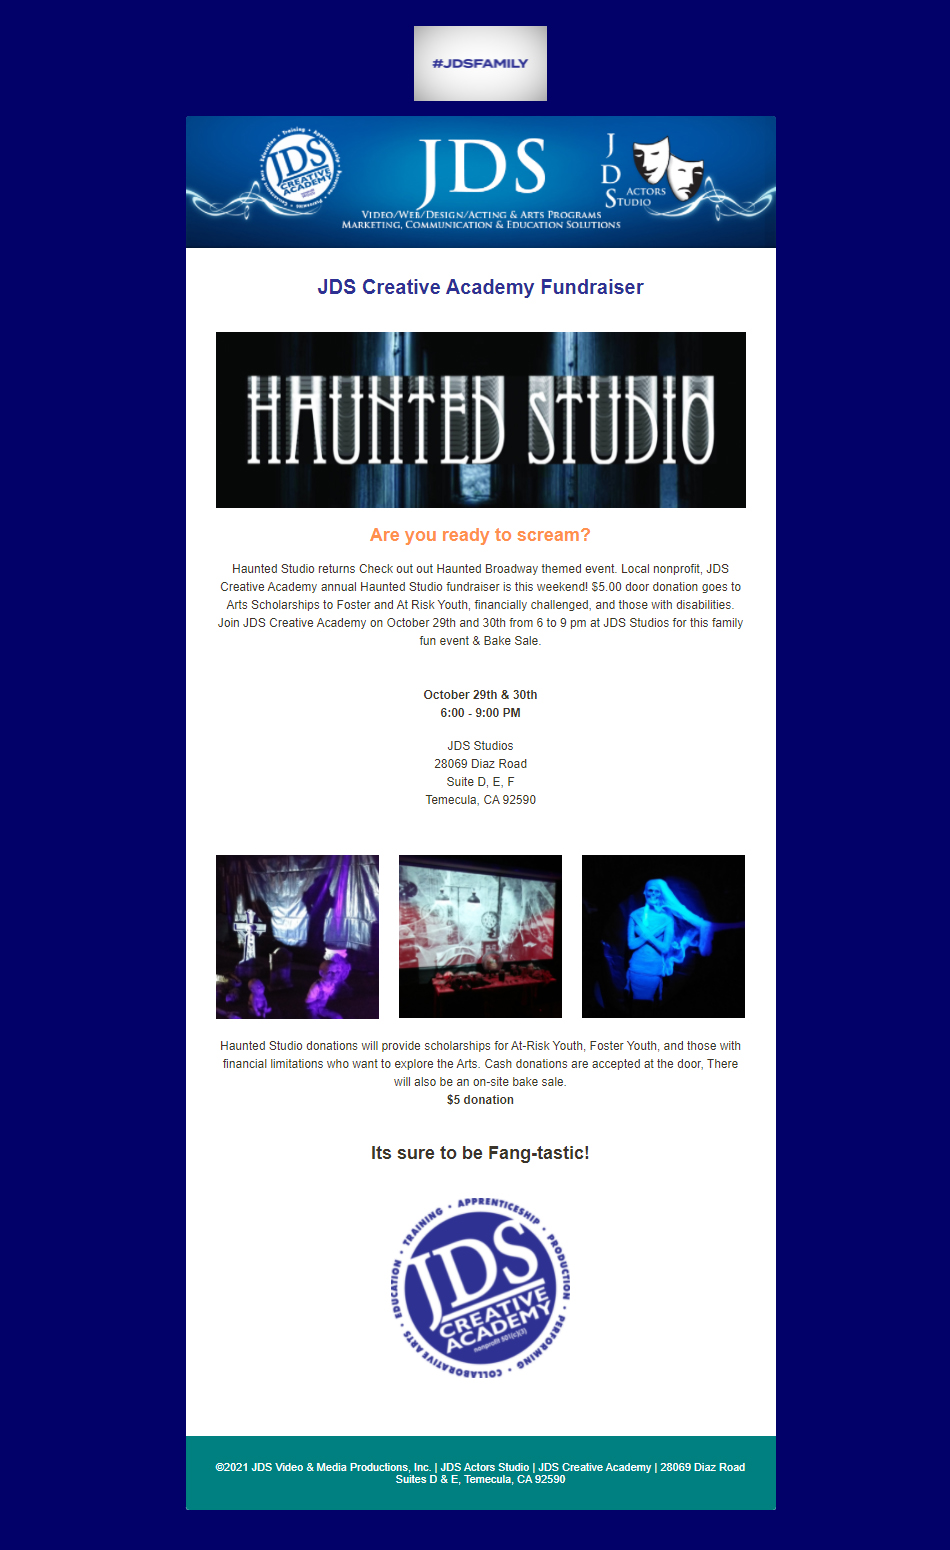 JDSCA Haunted Studio